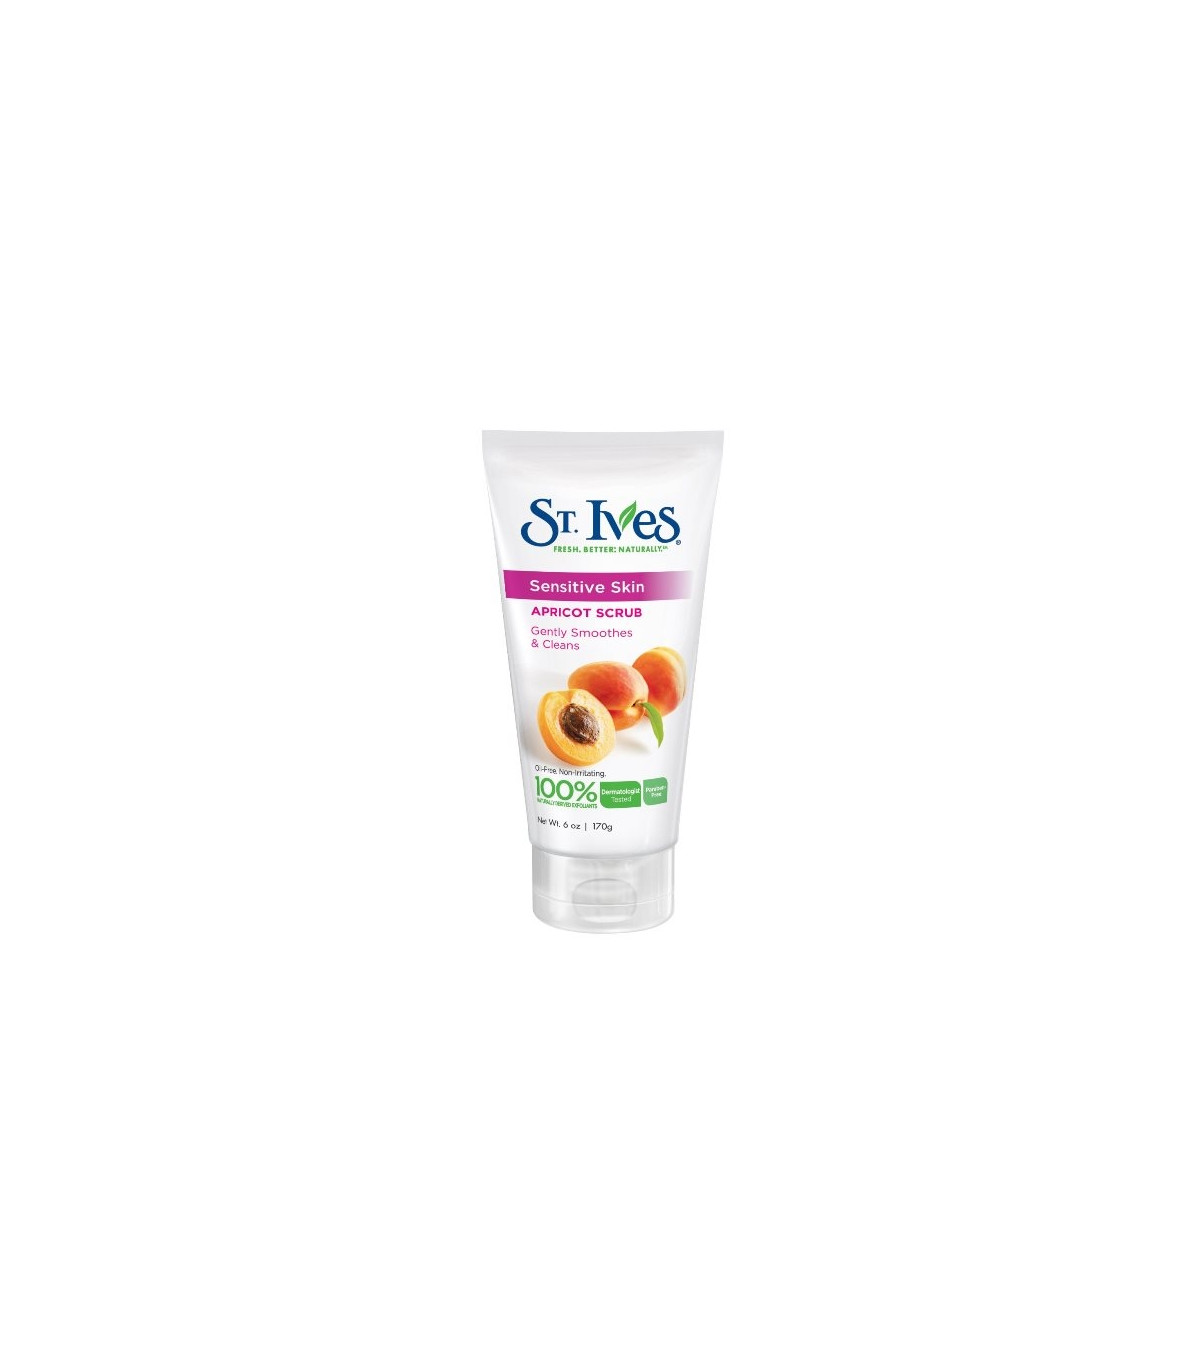 St Ives Sensitive Skin Apricot Scrub - 170g